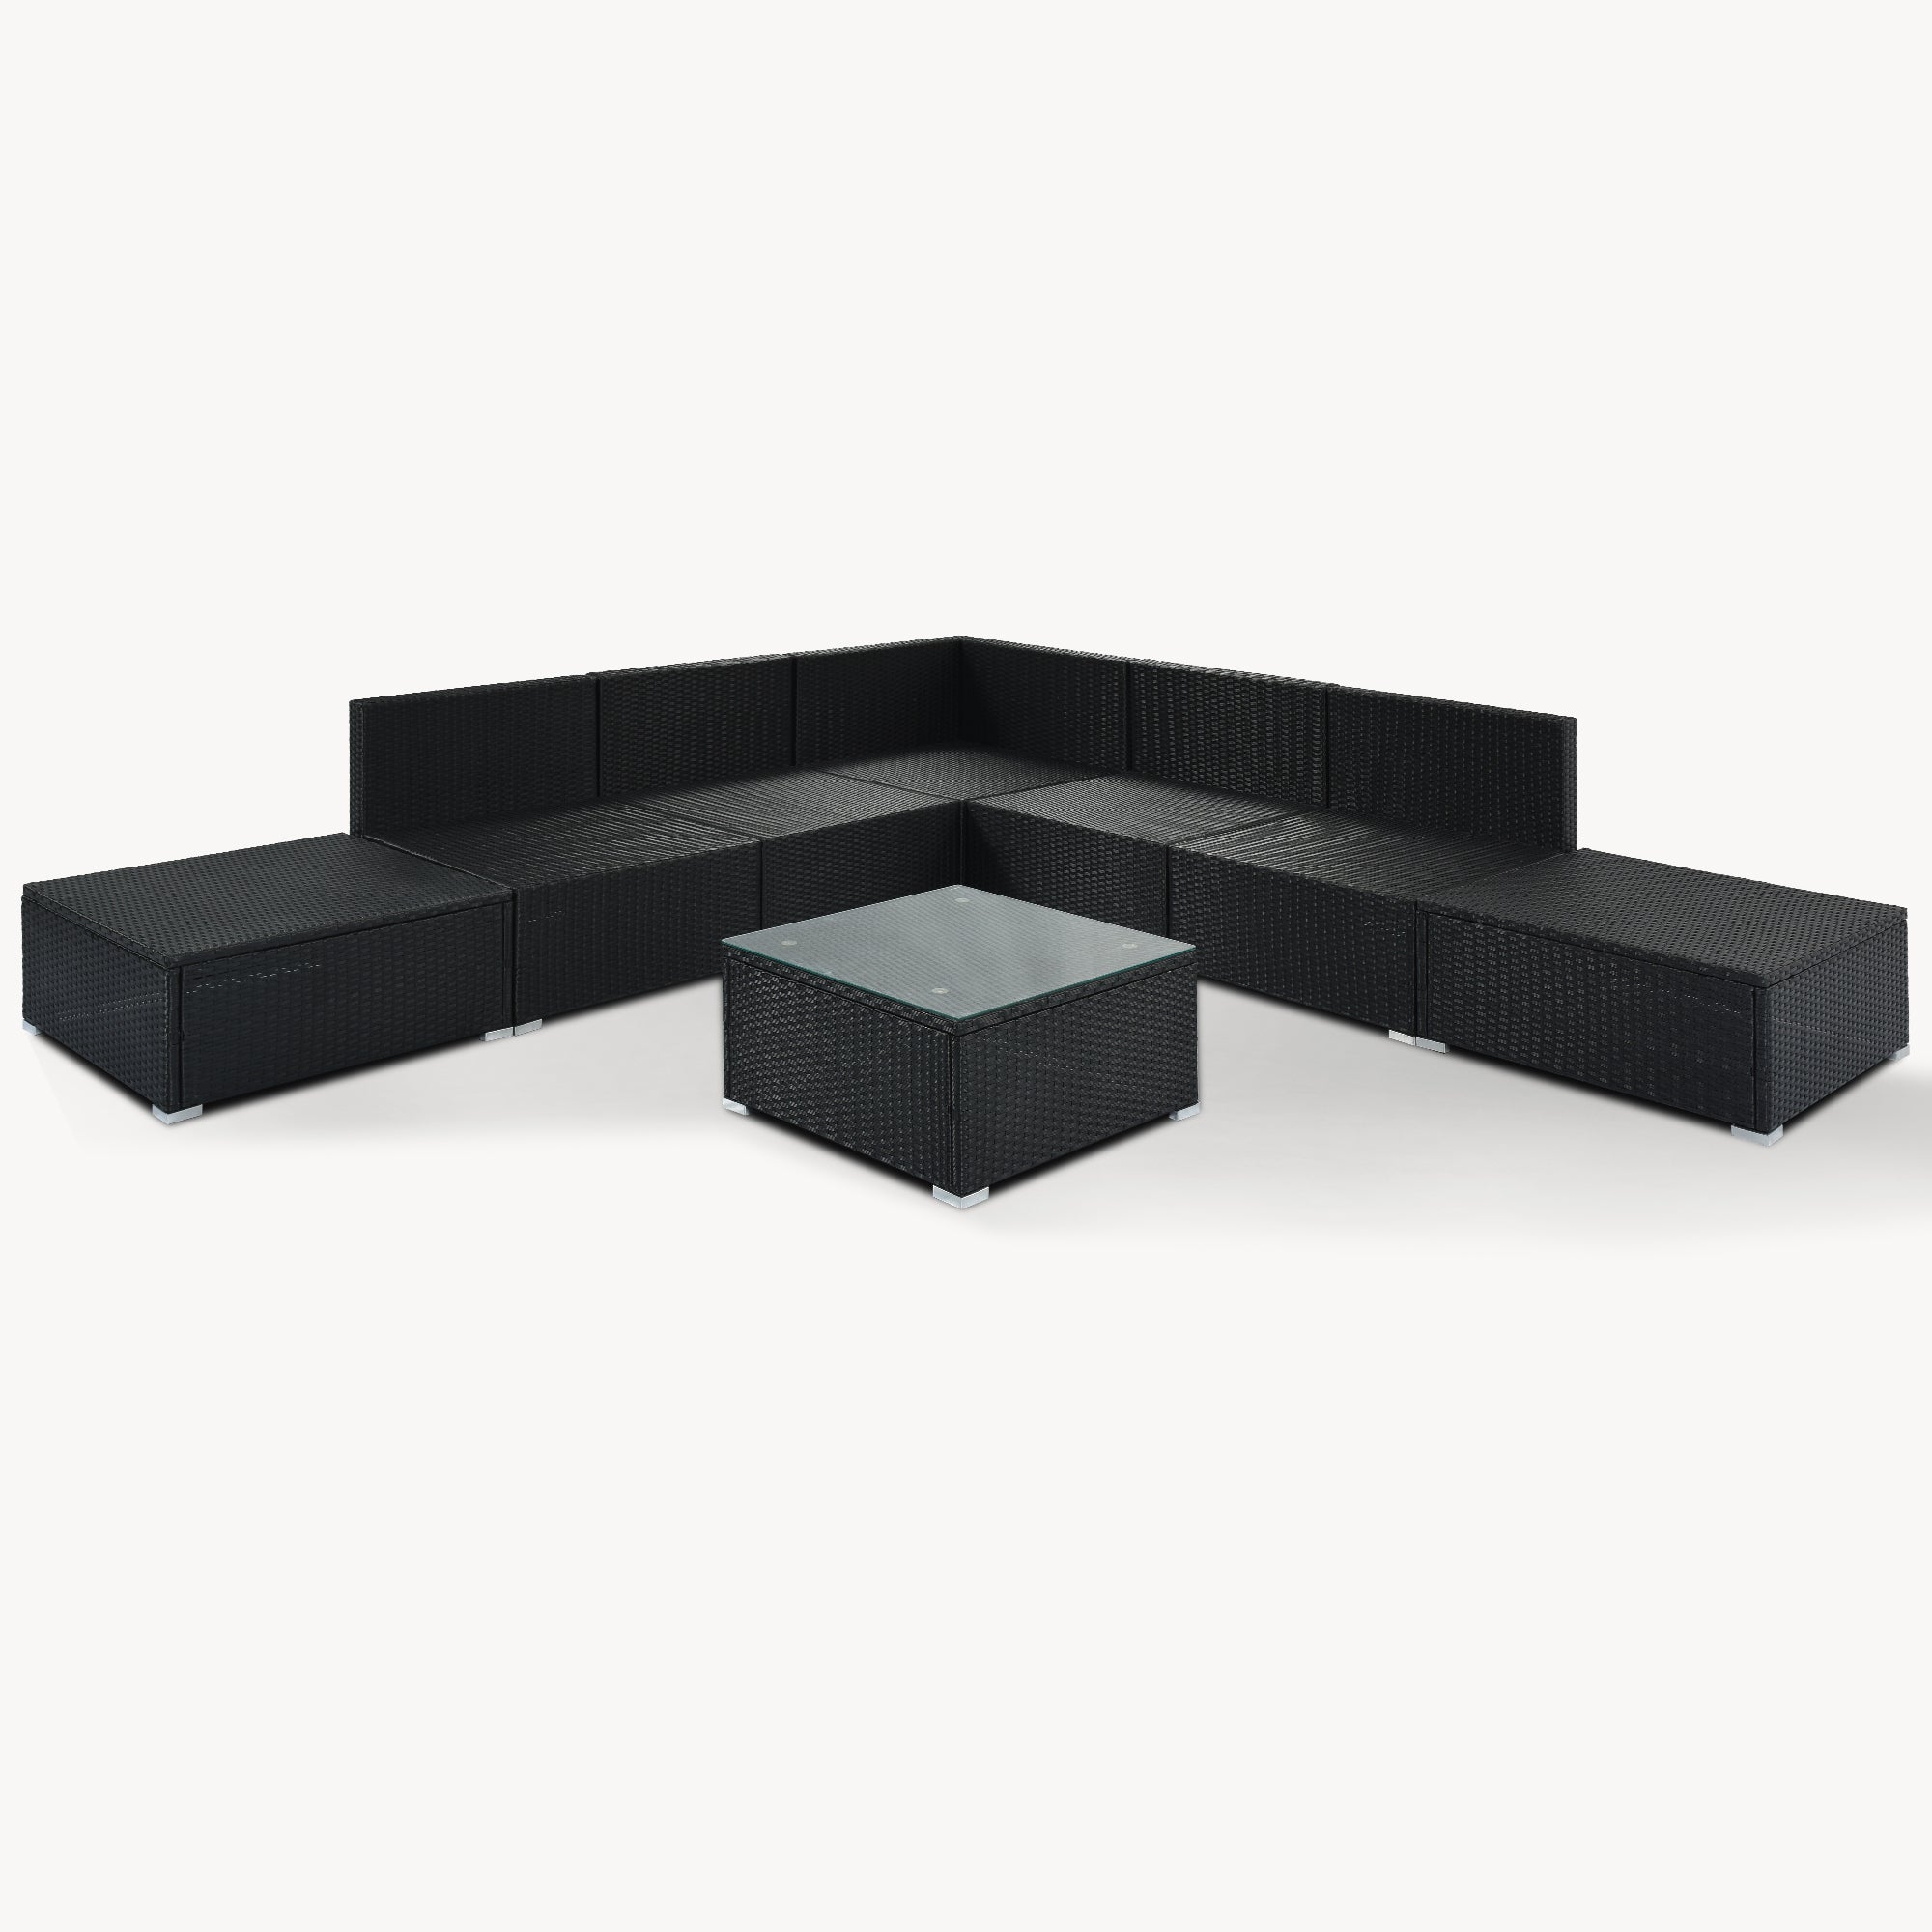 8-Pieces Garden Conversation Wicker Sofa Set, Single Sofa Combinable, Gray Cushions Black Wicker